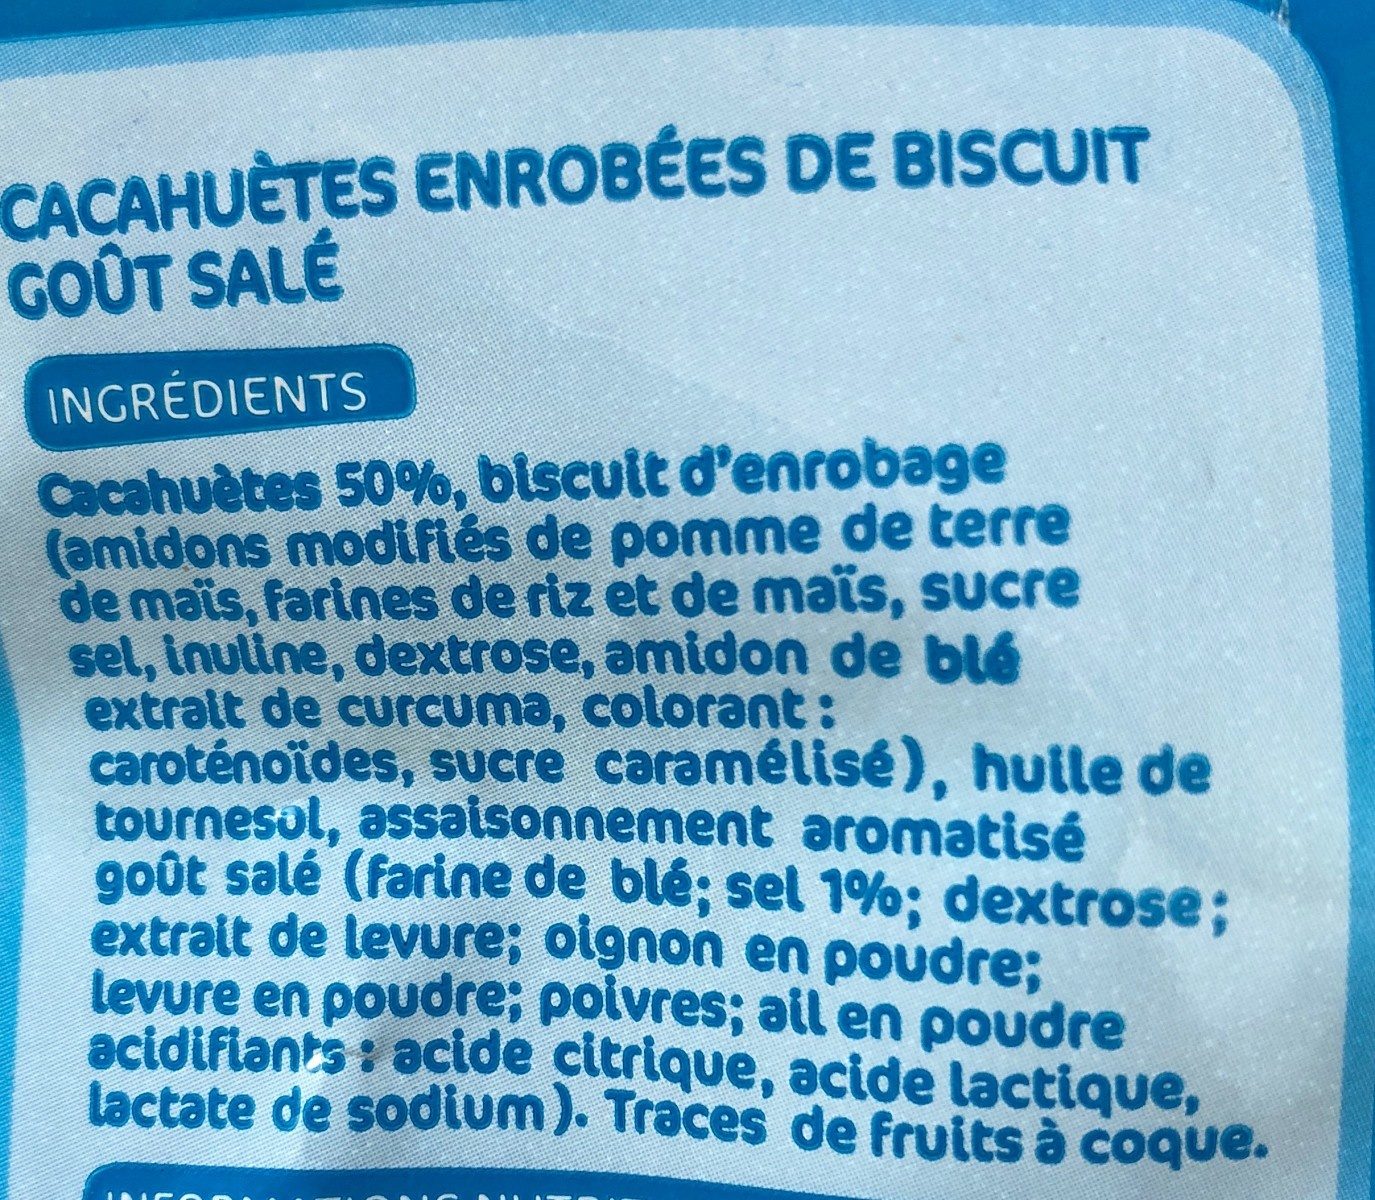 Cacahuetes enrobées goût salé - Ingredients - fr